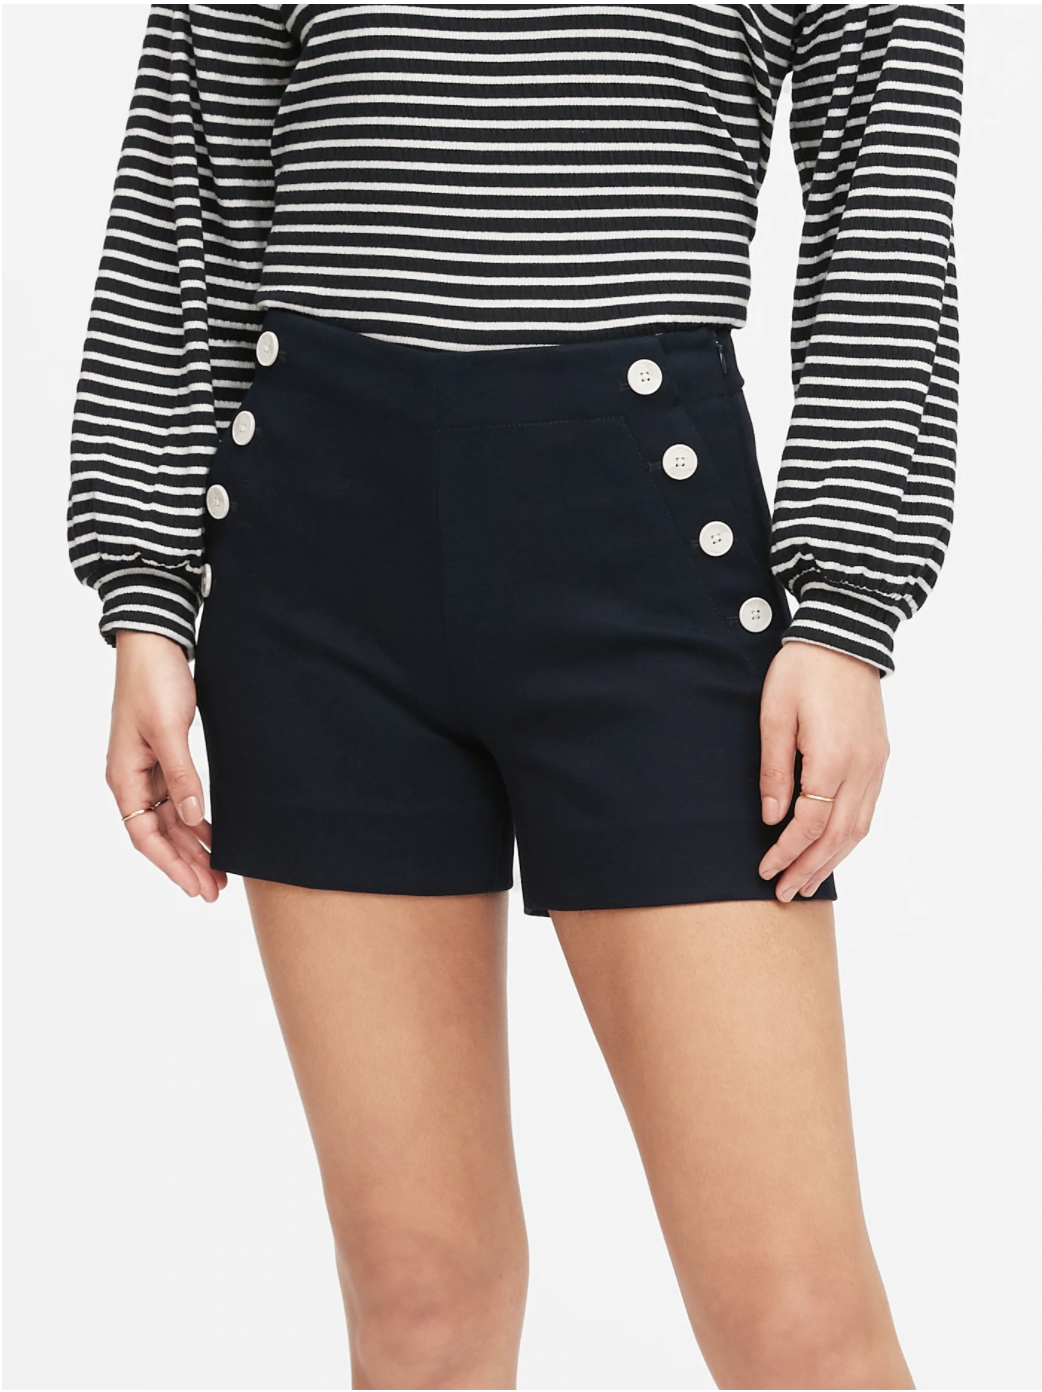 Similar Sailor Shorts